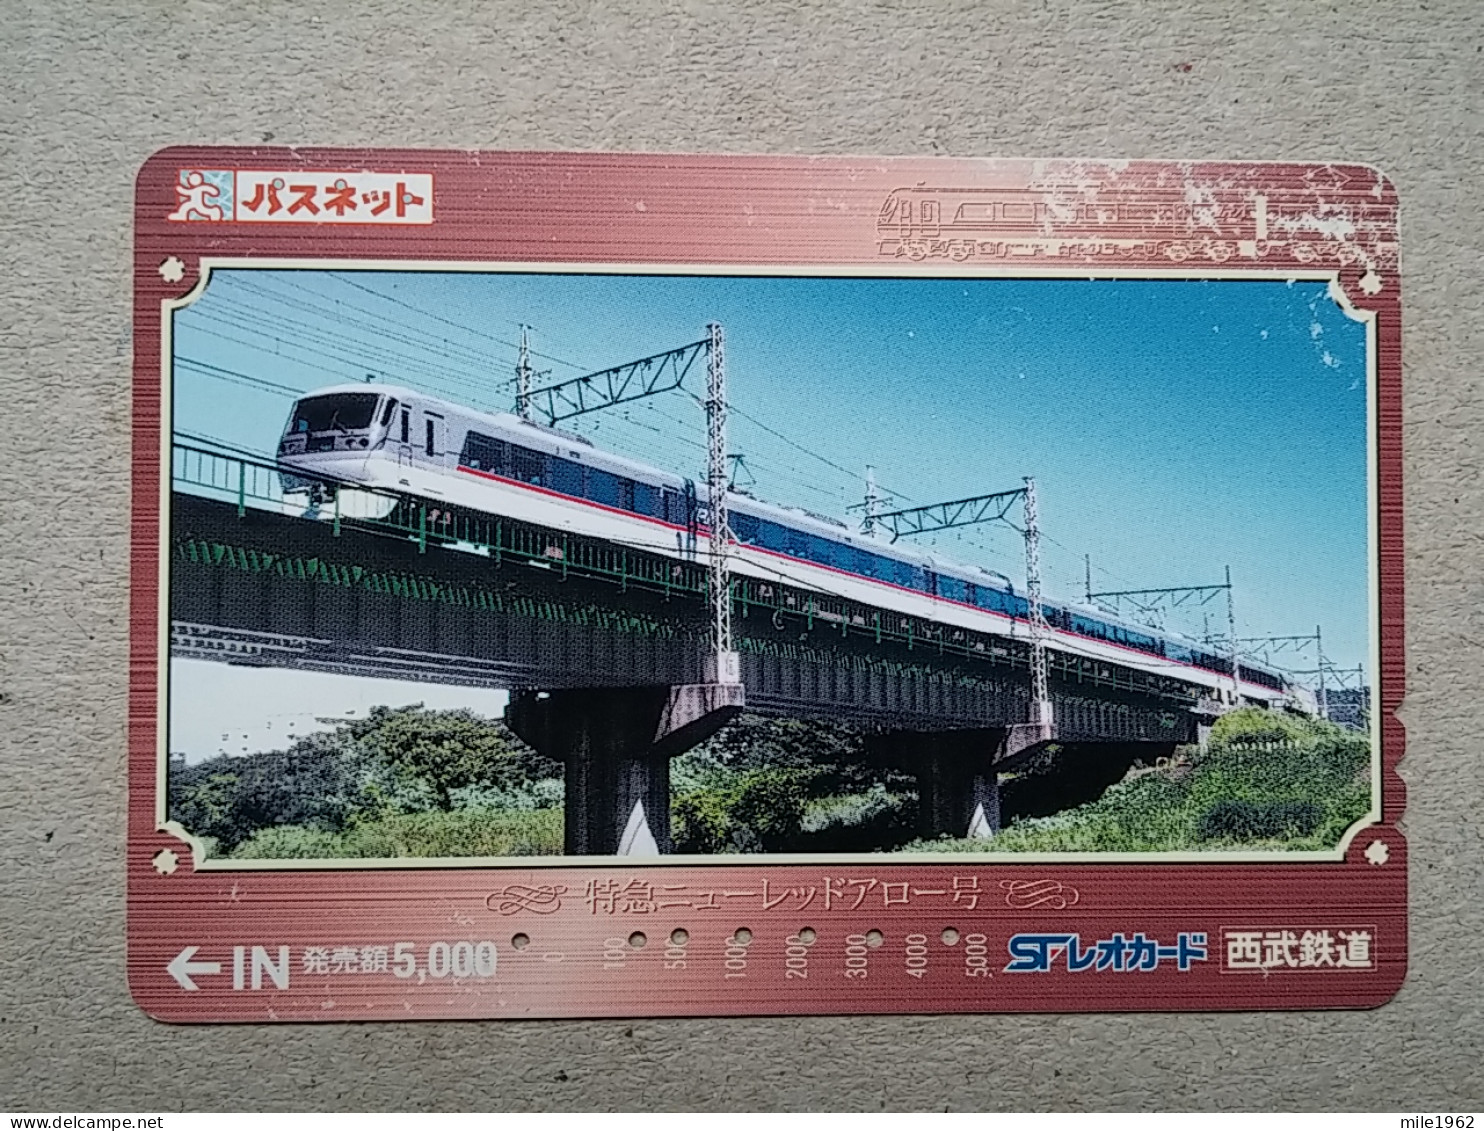 T-560 - JAPAN, Japon, Nipon, Carte Prepayee, Prepaid Card, Chemin De Fer, Railway, Train - Trains